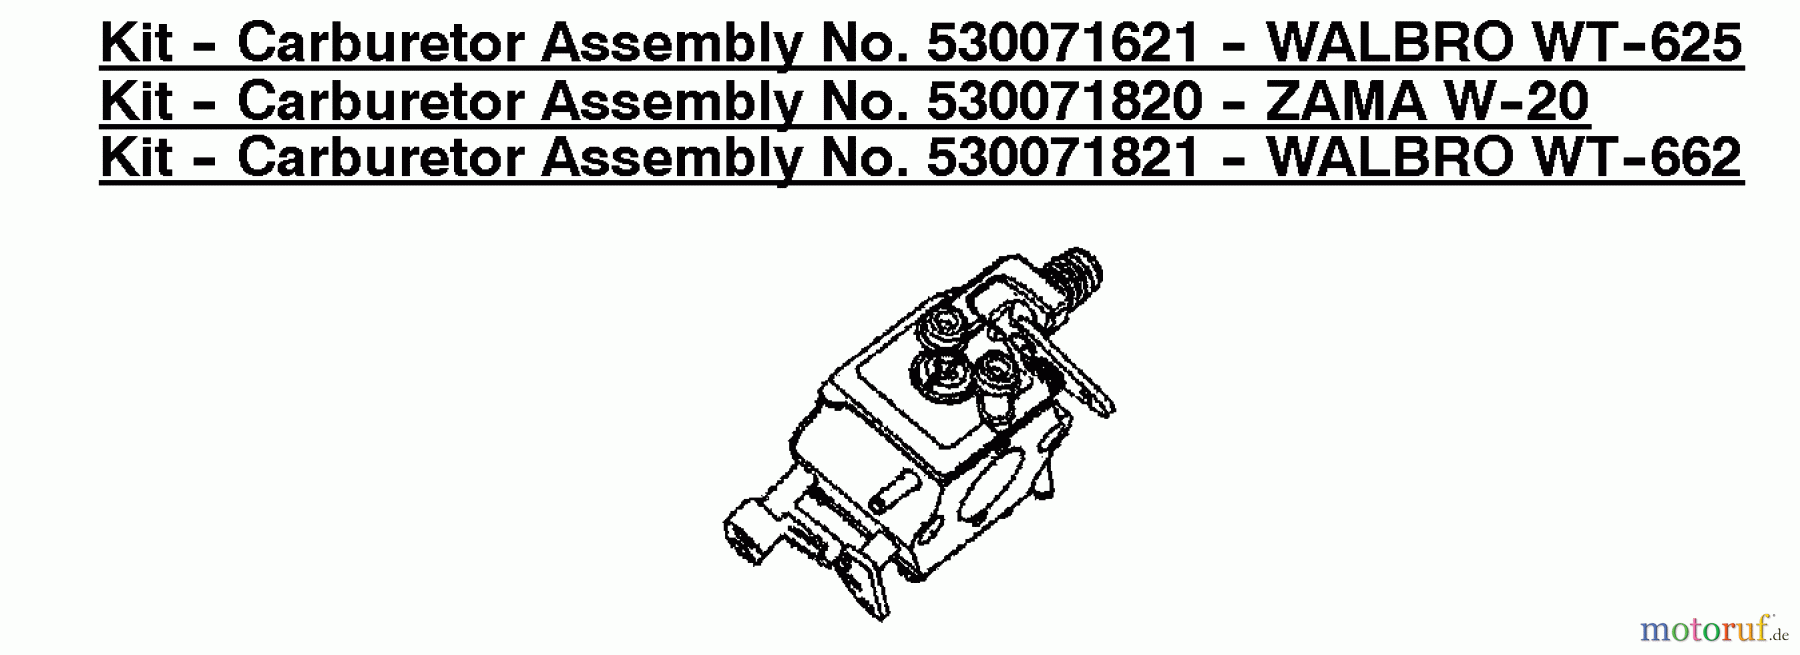  Poulan / Weed Eater Motorsägen PP260 (Type 1) - Poulan Pro Chainsaw Kit - Carburetor Assembly